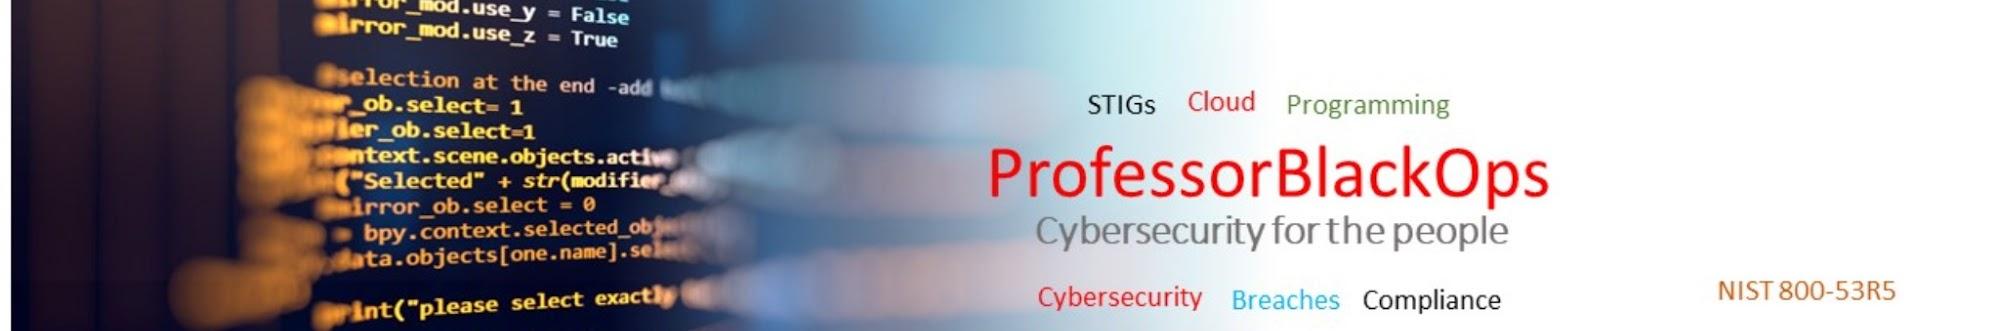 ProfessorBlackOps - CyberSecurity for the people